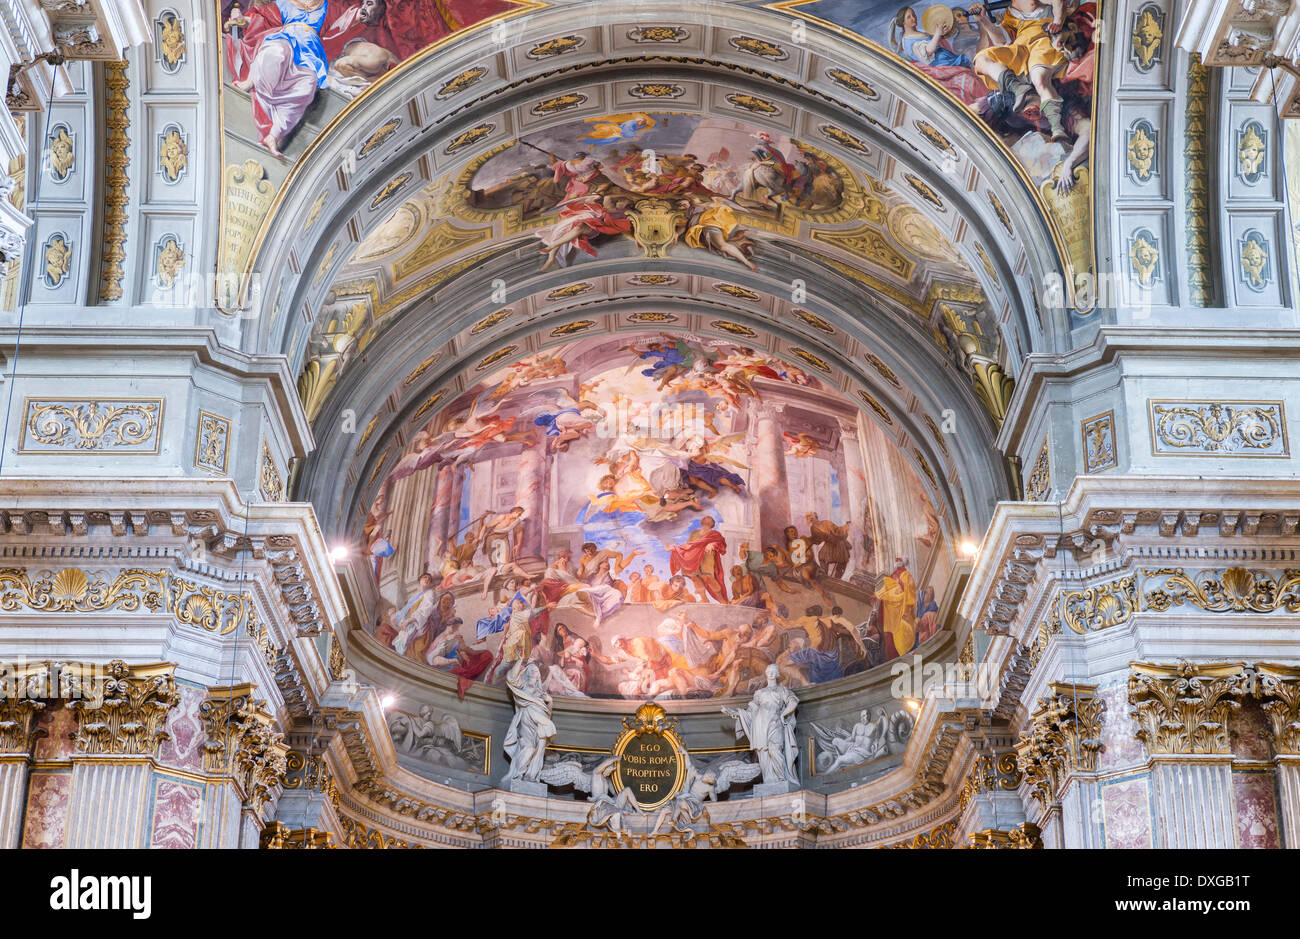 Barocke Trompe-l'œil Apsis Fresken, Apotheose des Hl. Ignatius, der Verherrlichung von St. Ignatius, von Andrea Pozzo Stockfoto